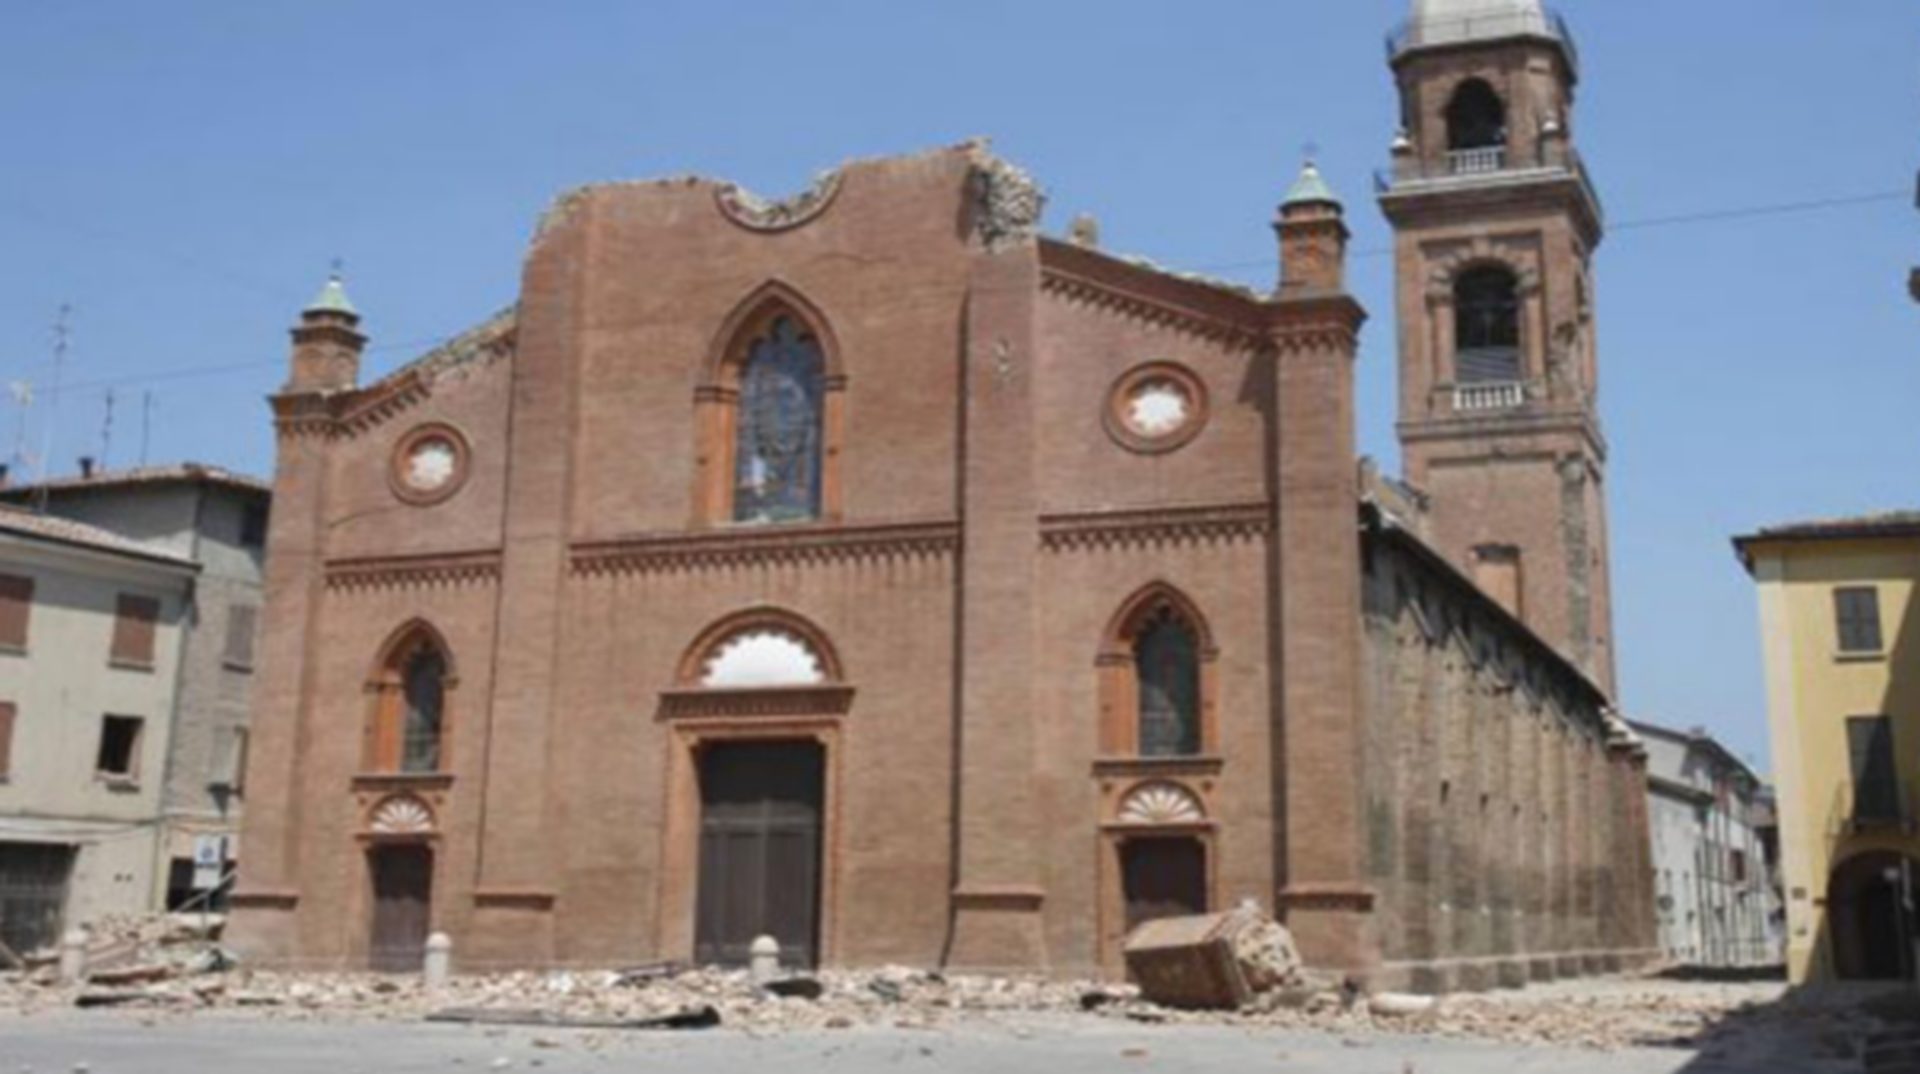 La collégiale Santa Maria Maggiore, de Mirandola, après le tremblement de terre de 2012 (photo DR)